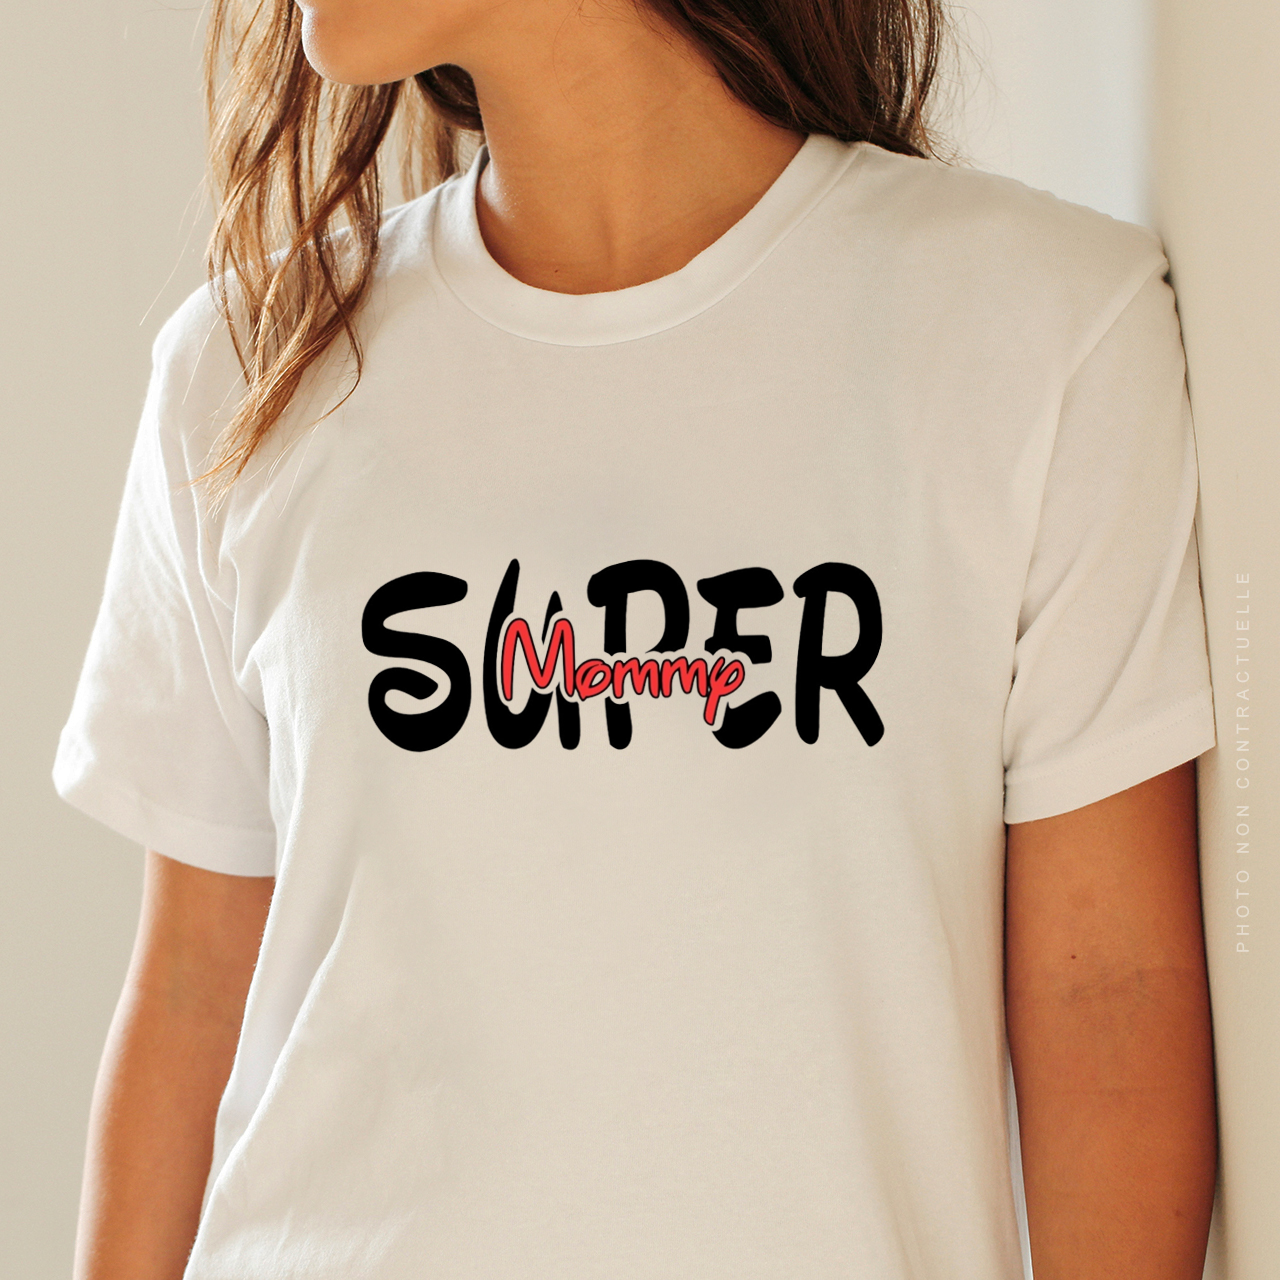 T-shirt Super Mommy